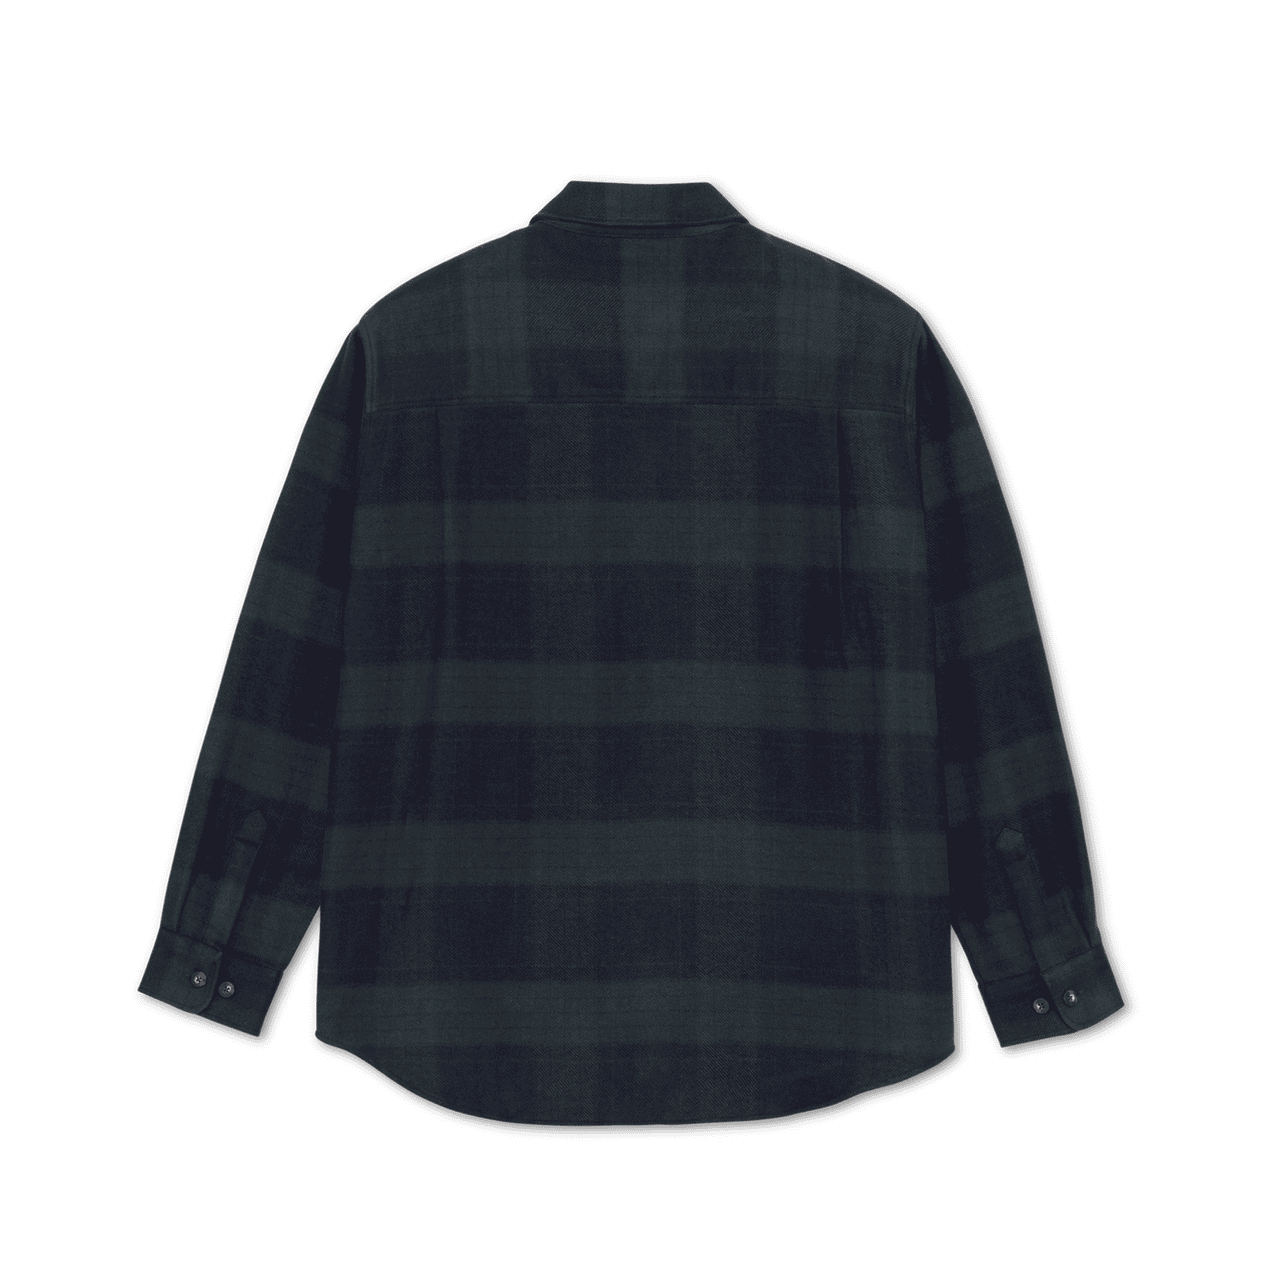 Polar | Mike Longsleeve Flannel Button Up Shirt - Navy/Teal